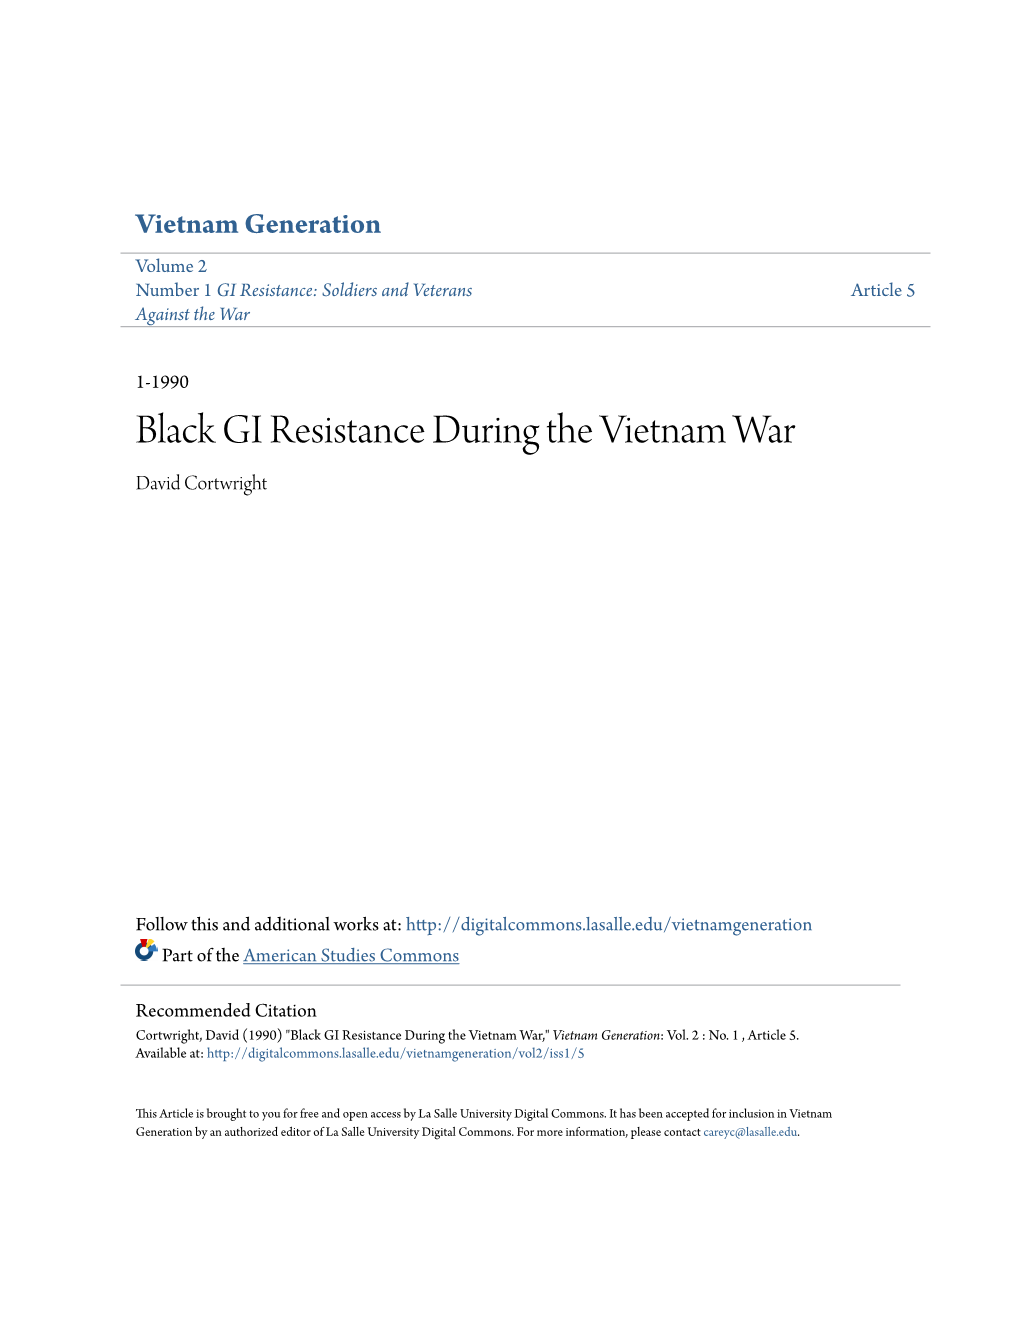 Black GI Resistance During the Vietnam War David Cortwright